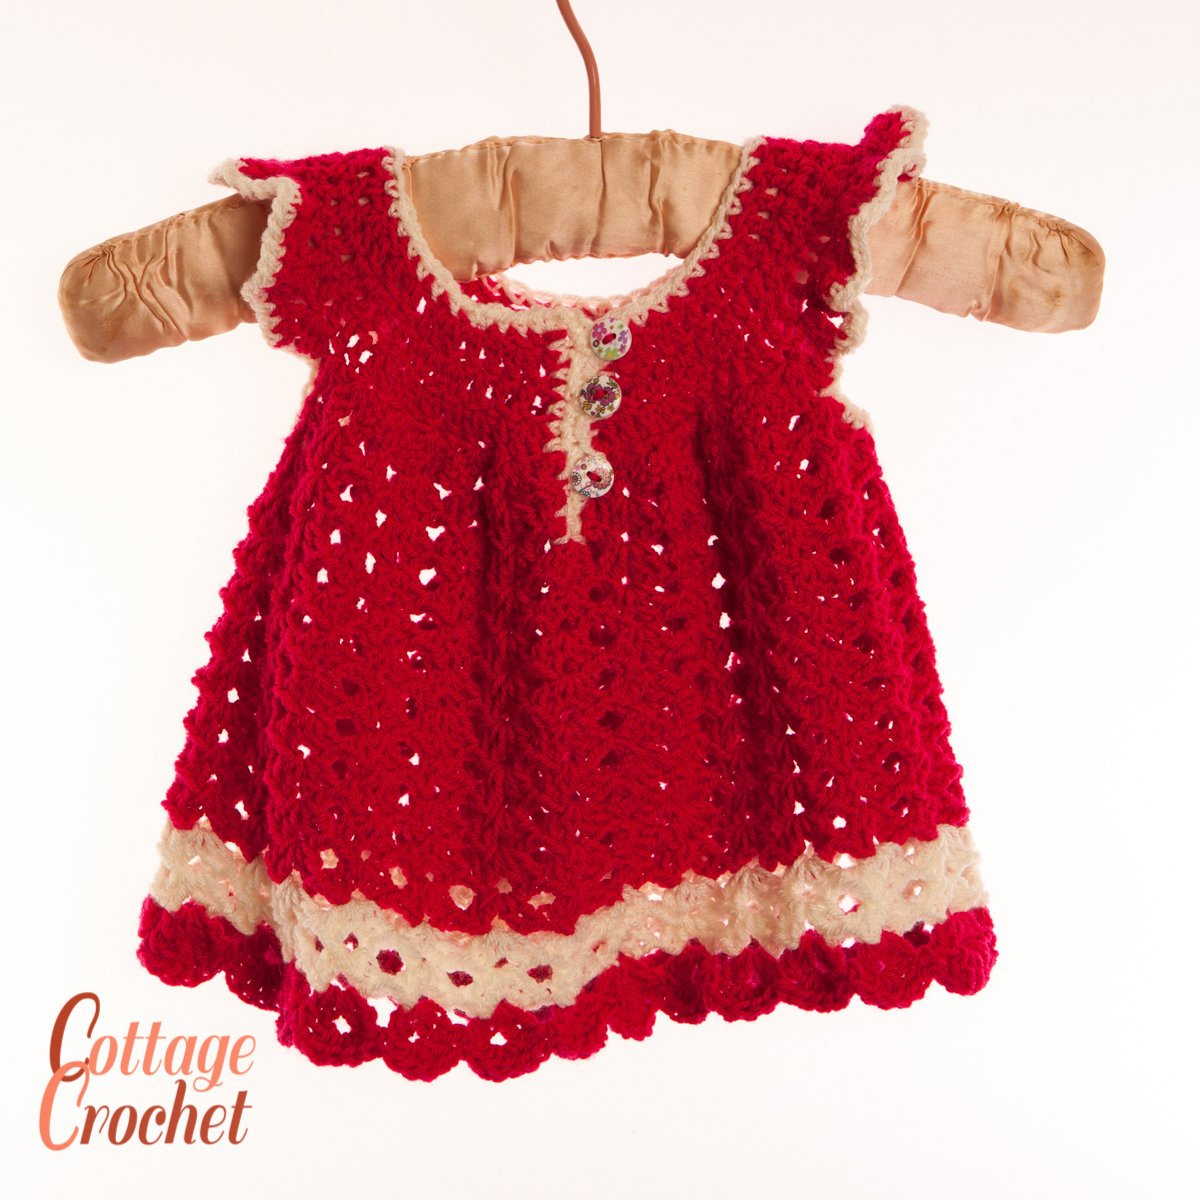 Crochet Baby Pinafore Dress Pattern Bapinafore Hashtag On Twitter